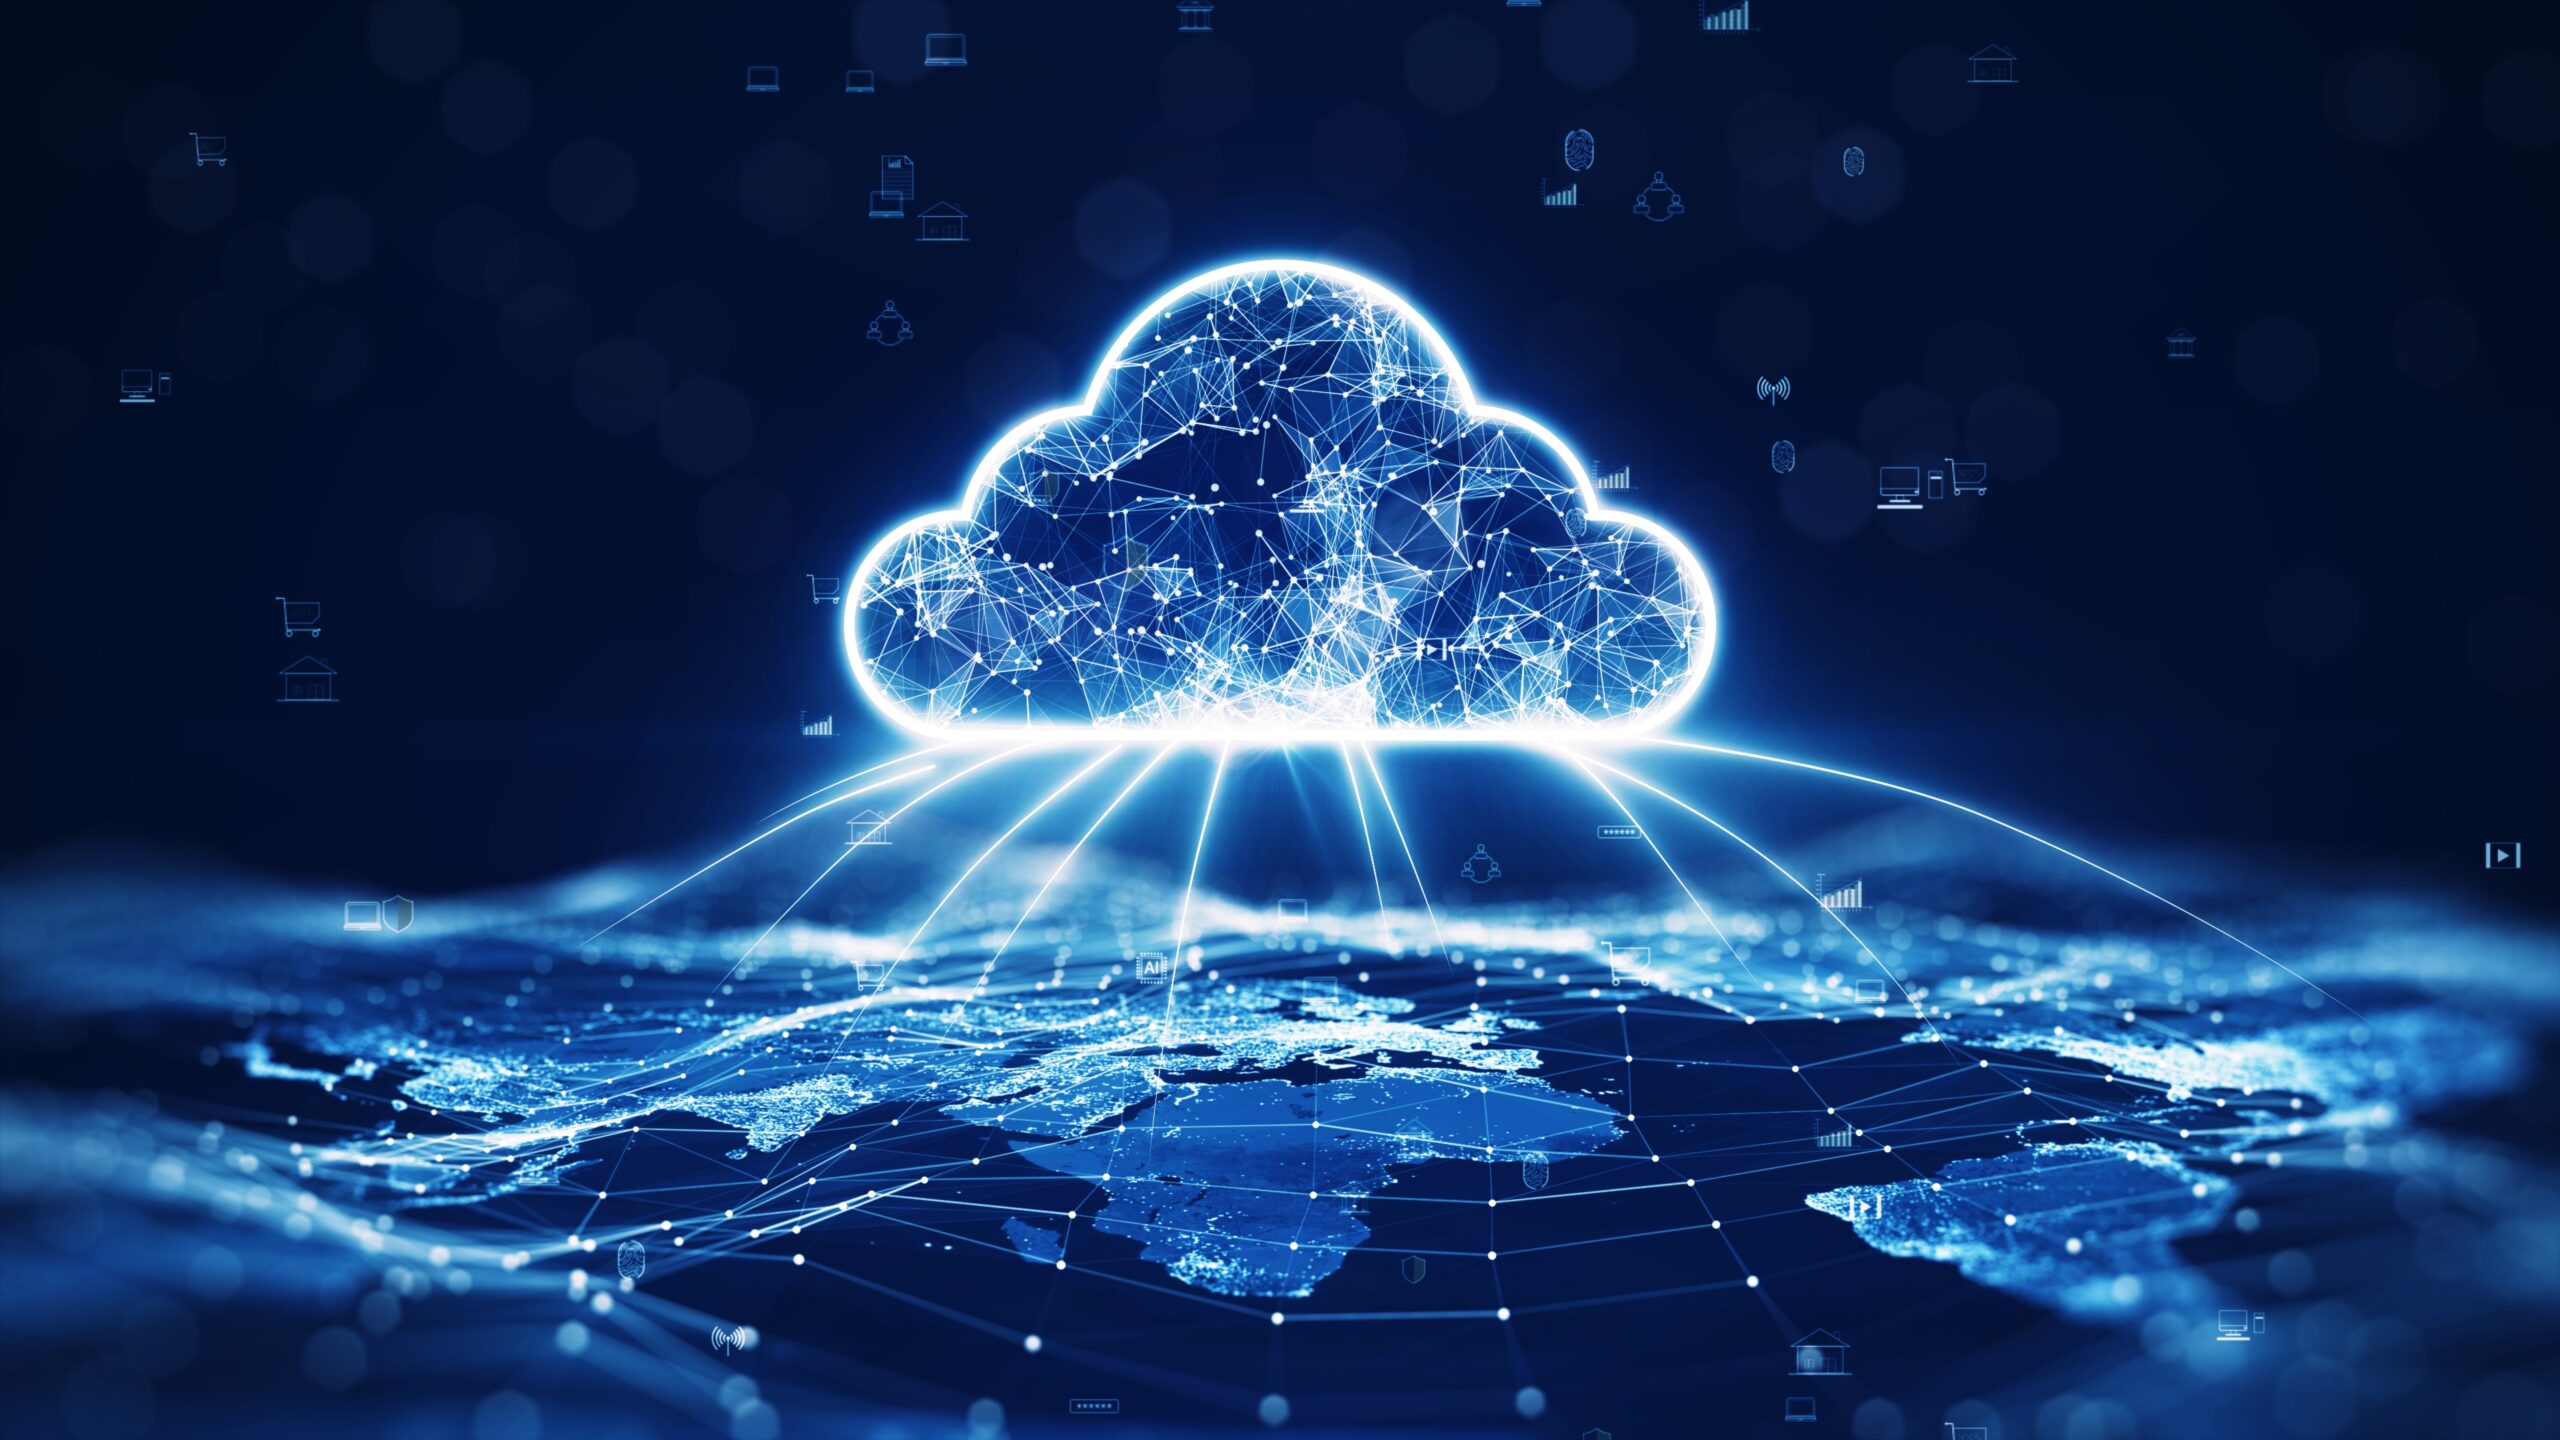 Cloud Technology Revolutionizes Network-As-A-Service